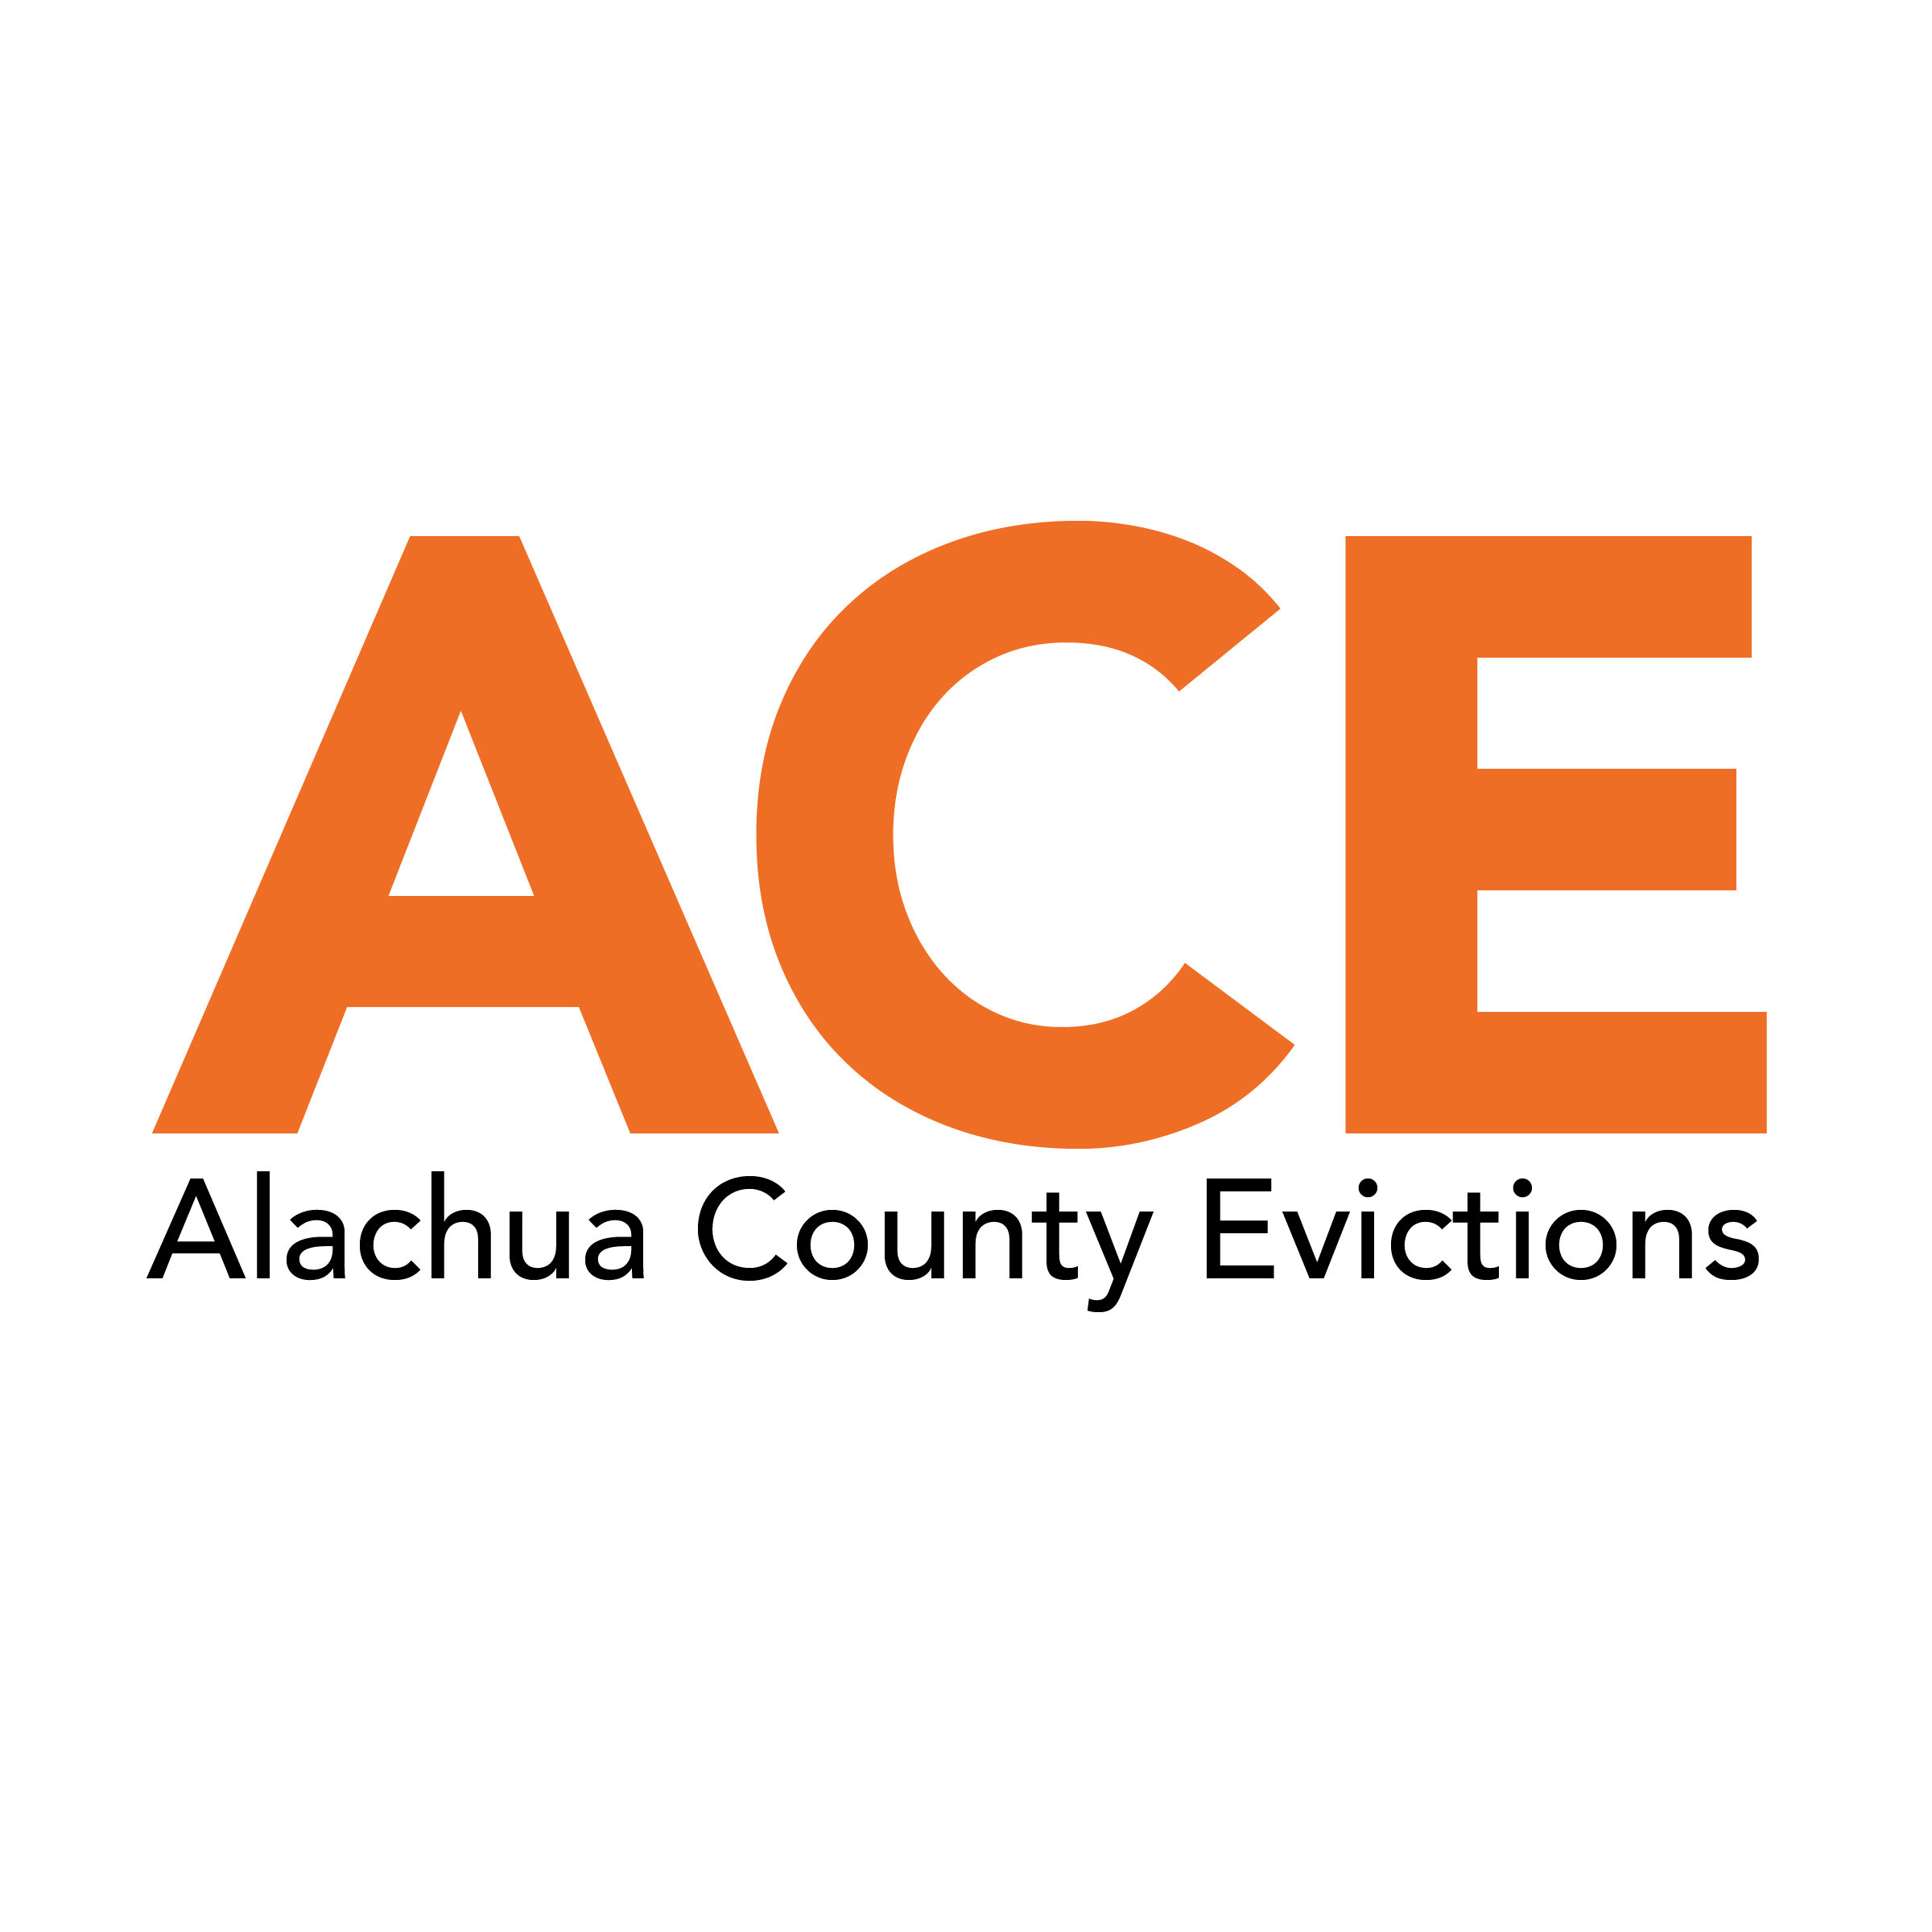 Alachua County Evictions